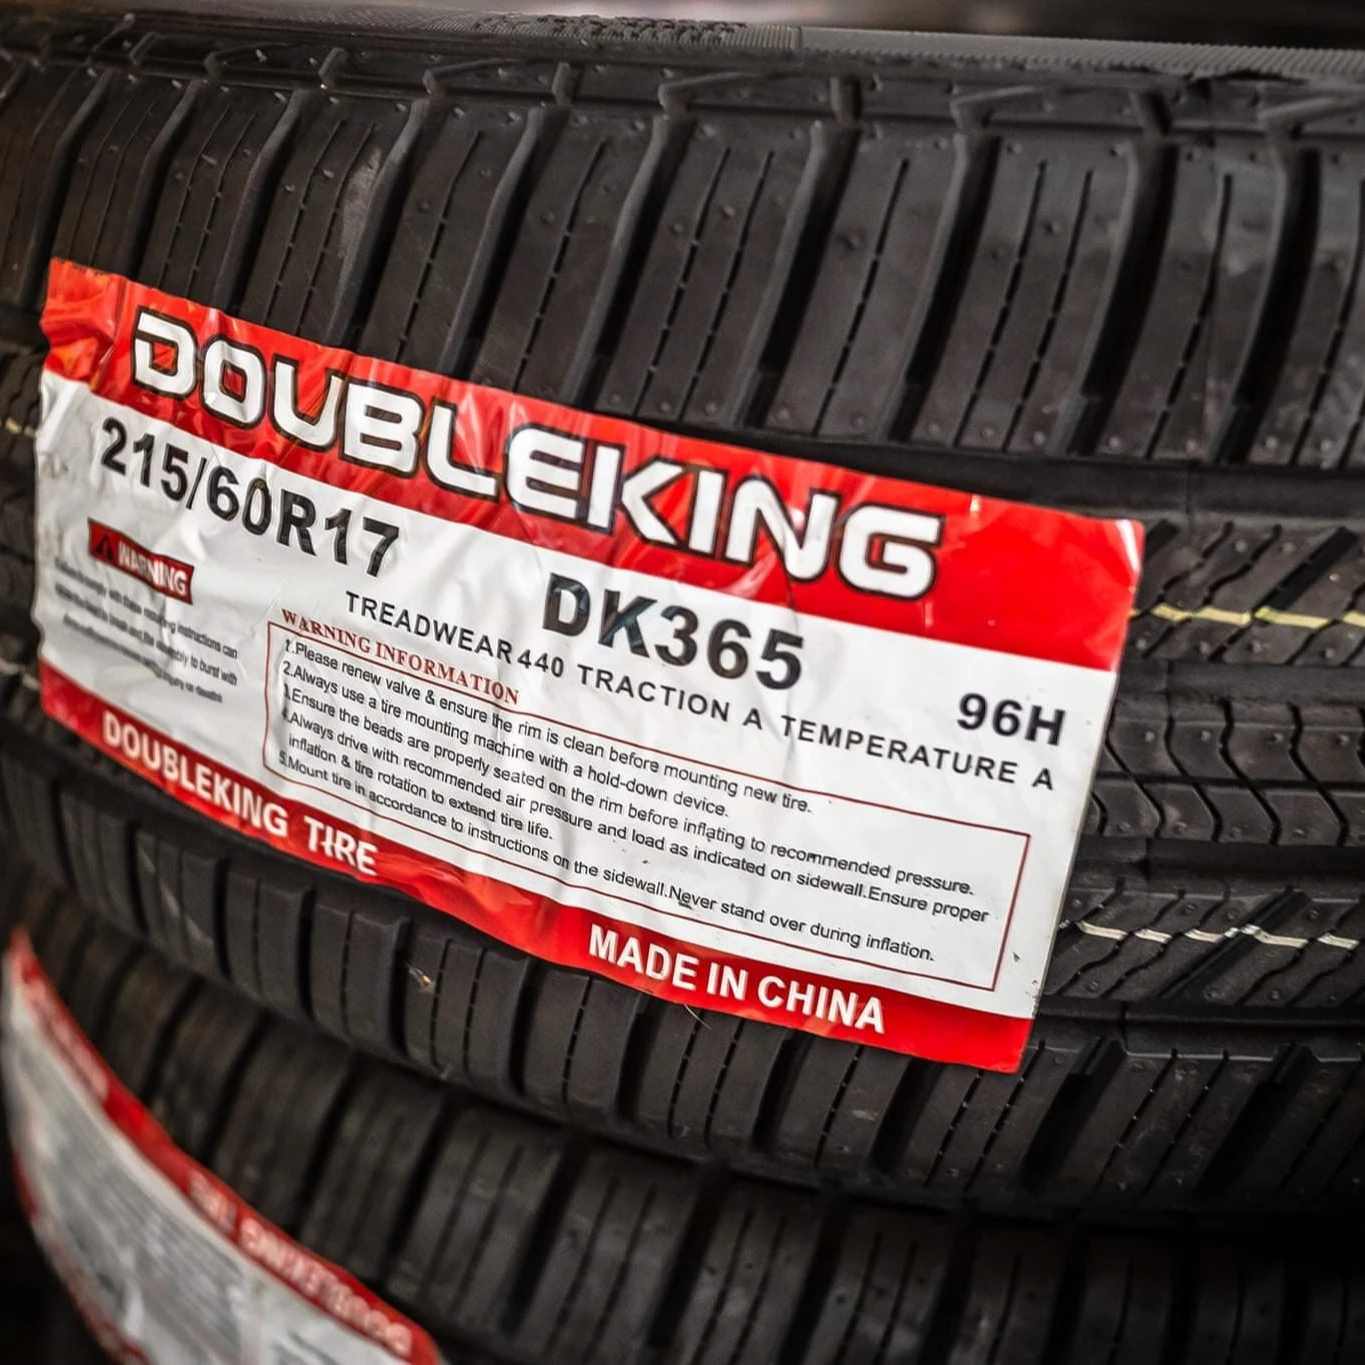 Double King/Luistone/Alfamotors Brand Passenger Car Tyres UHP